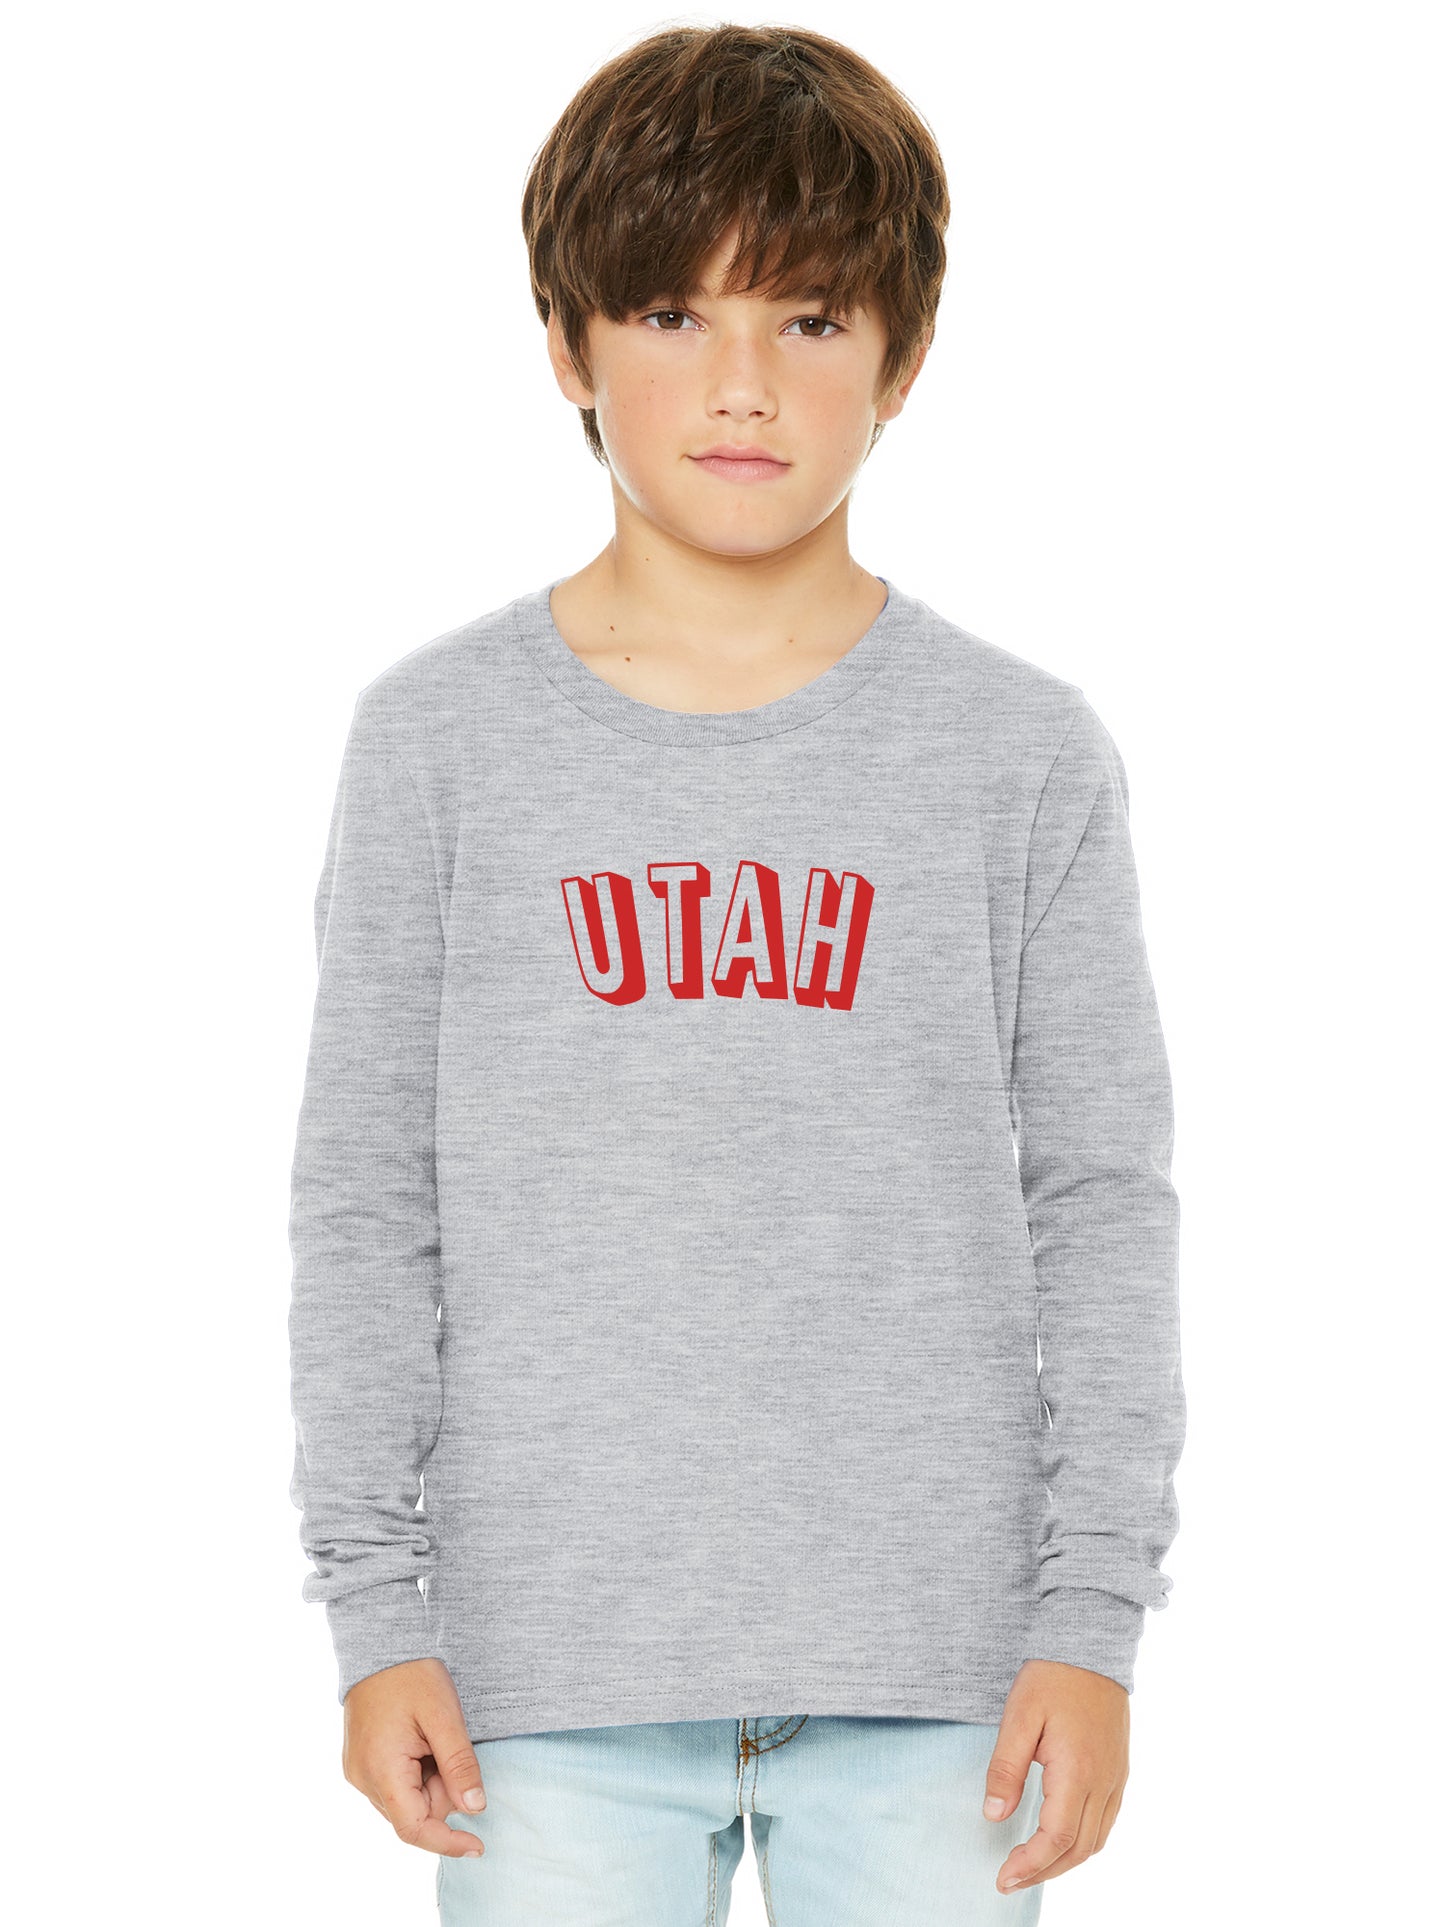 Daxton Youth Long Sleeve Utah Basic Tshirt